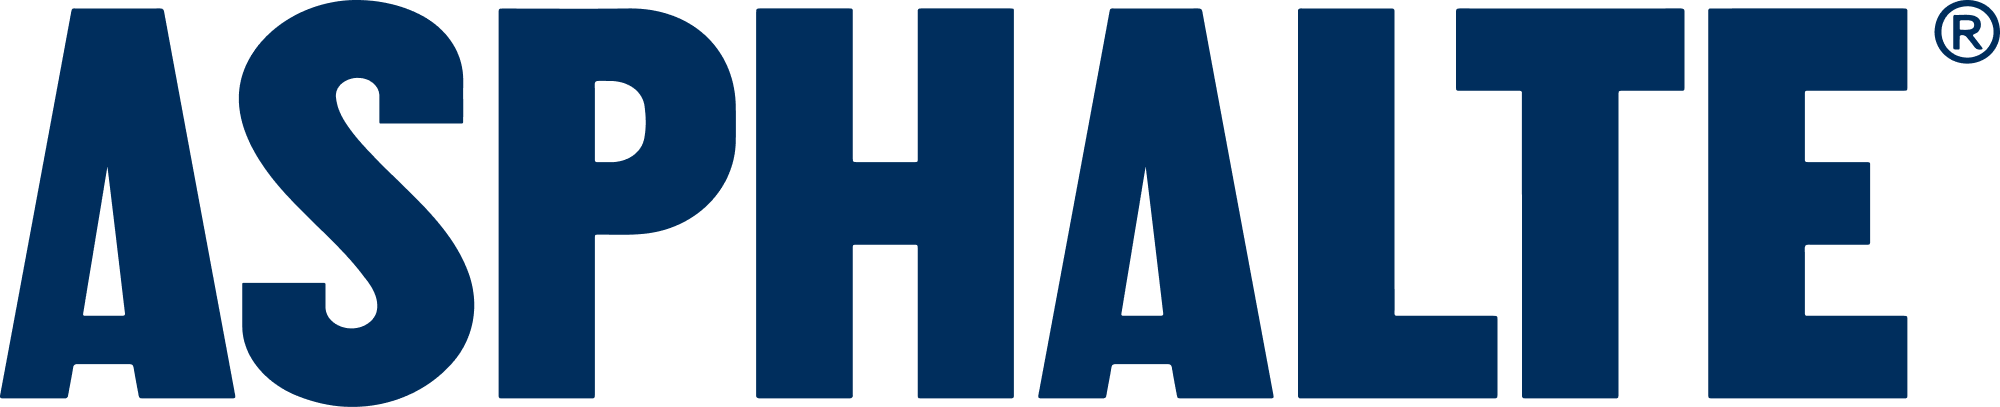 FAQ Asphalte logo